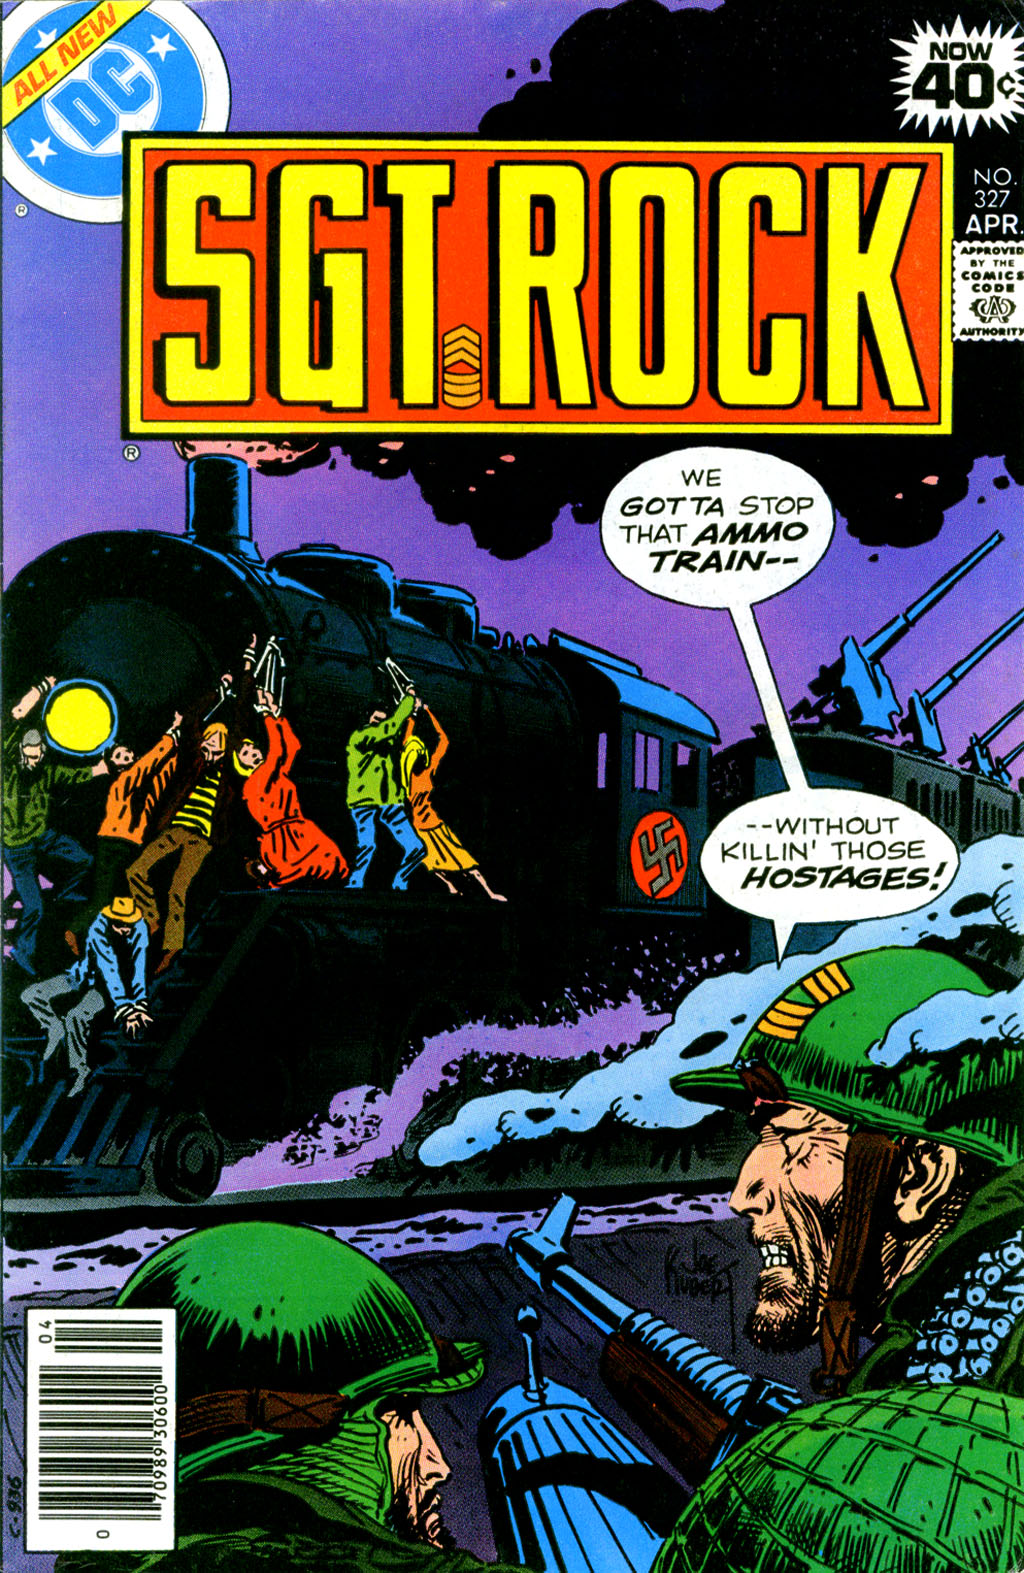 Read online Sgt. Rock comic -  Issue #327 - 1